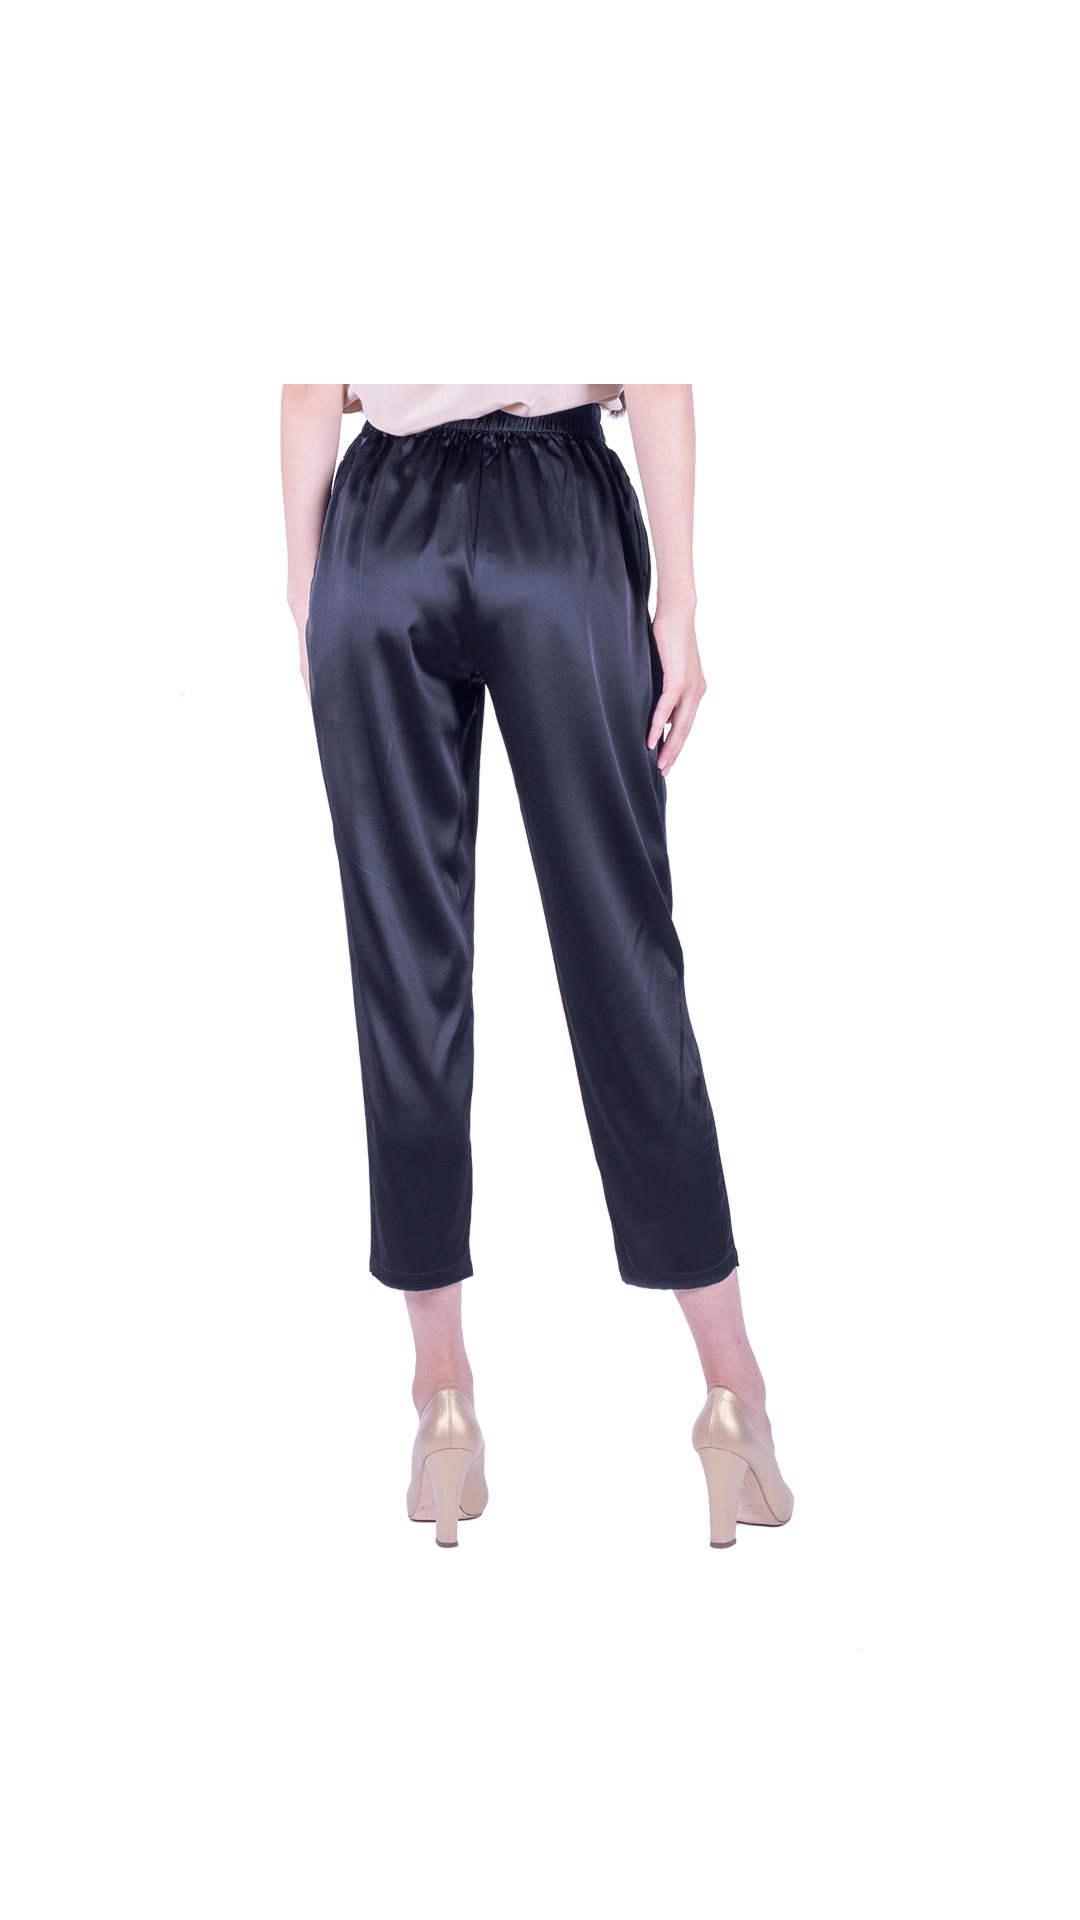 PANSILK01 NERO PANTALACCIO DONNA 1 1stAmerican elegante pantalone da donna 100% pura seta